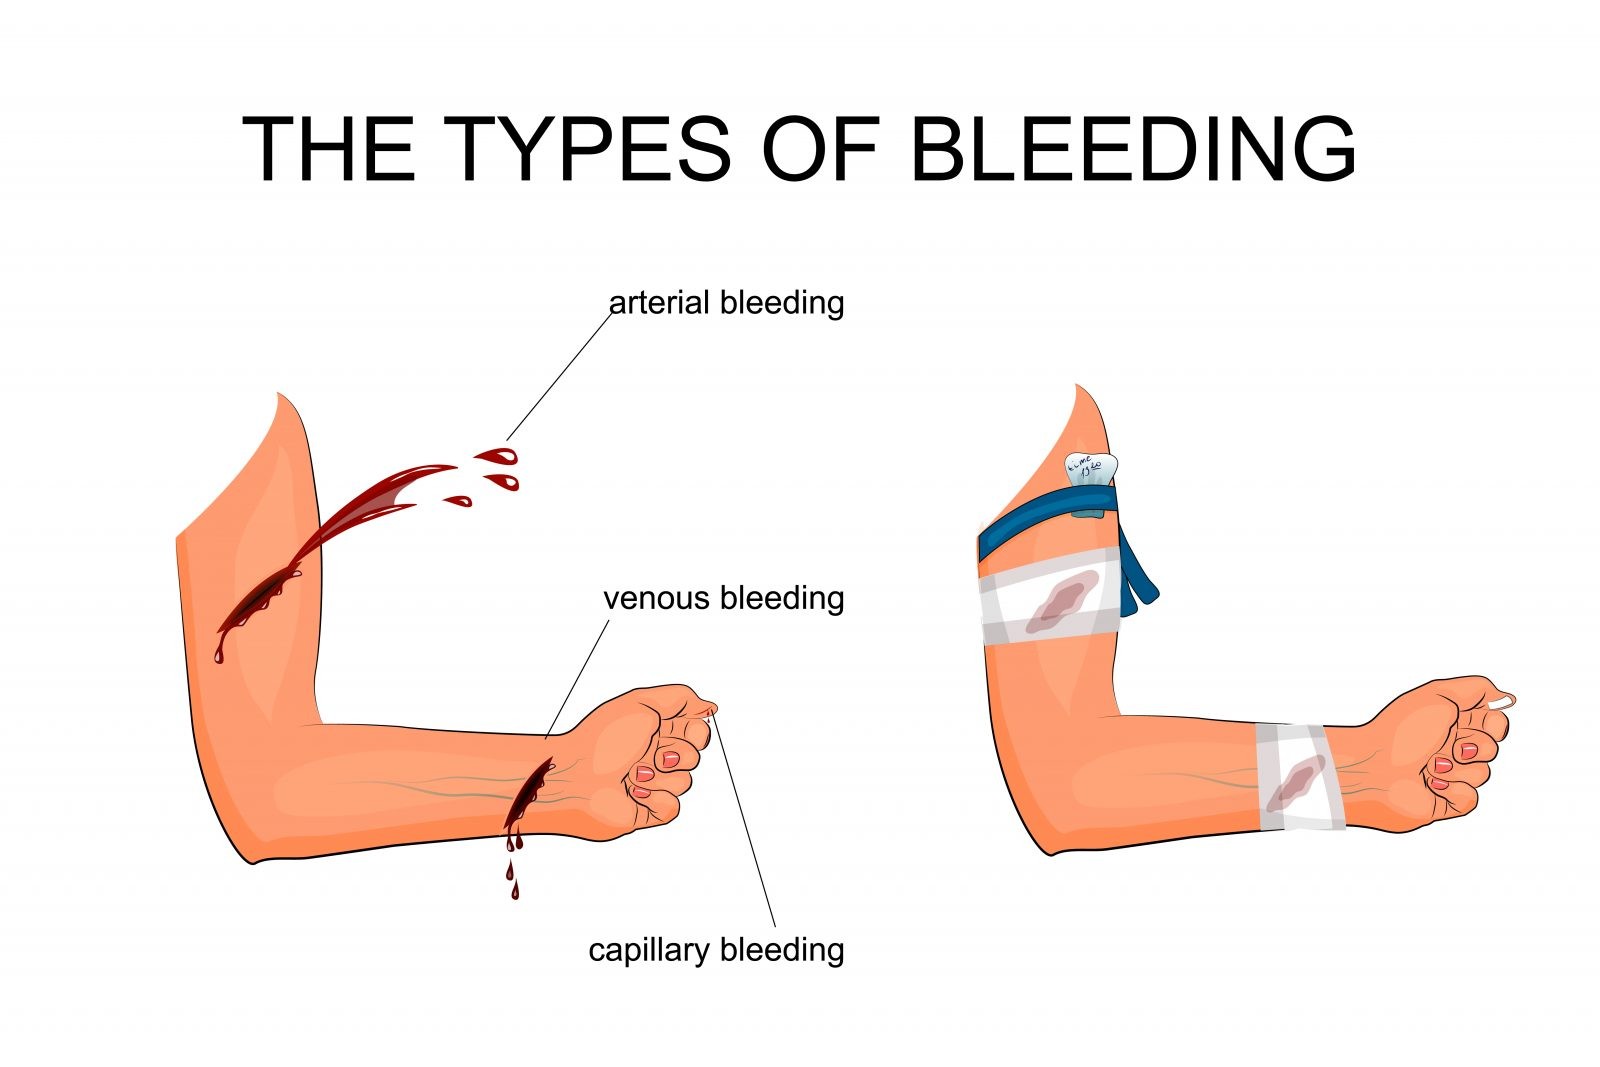 venous bleeding